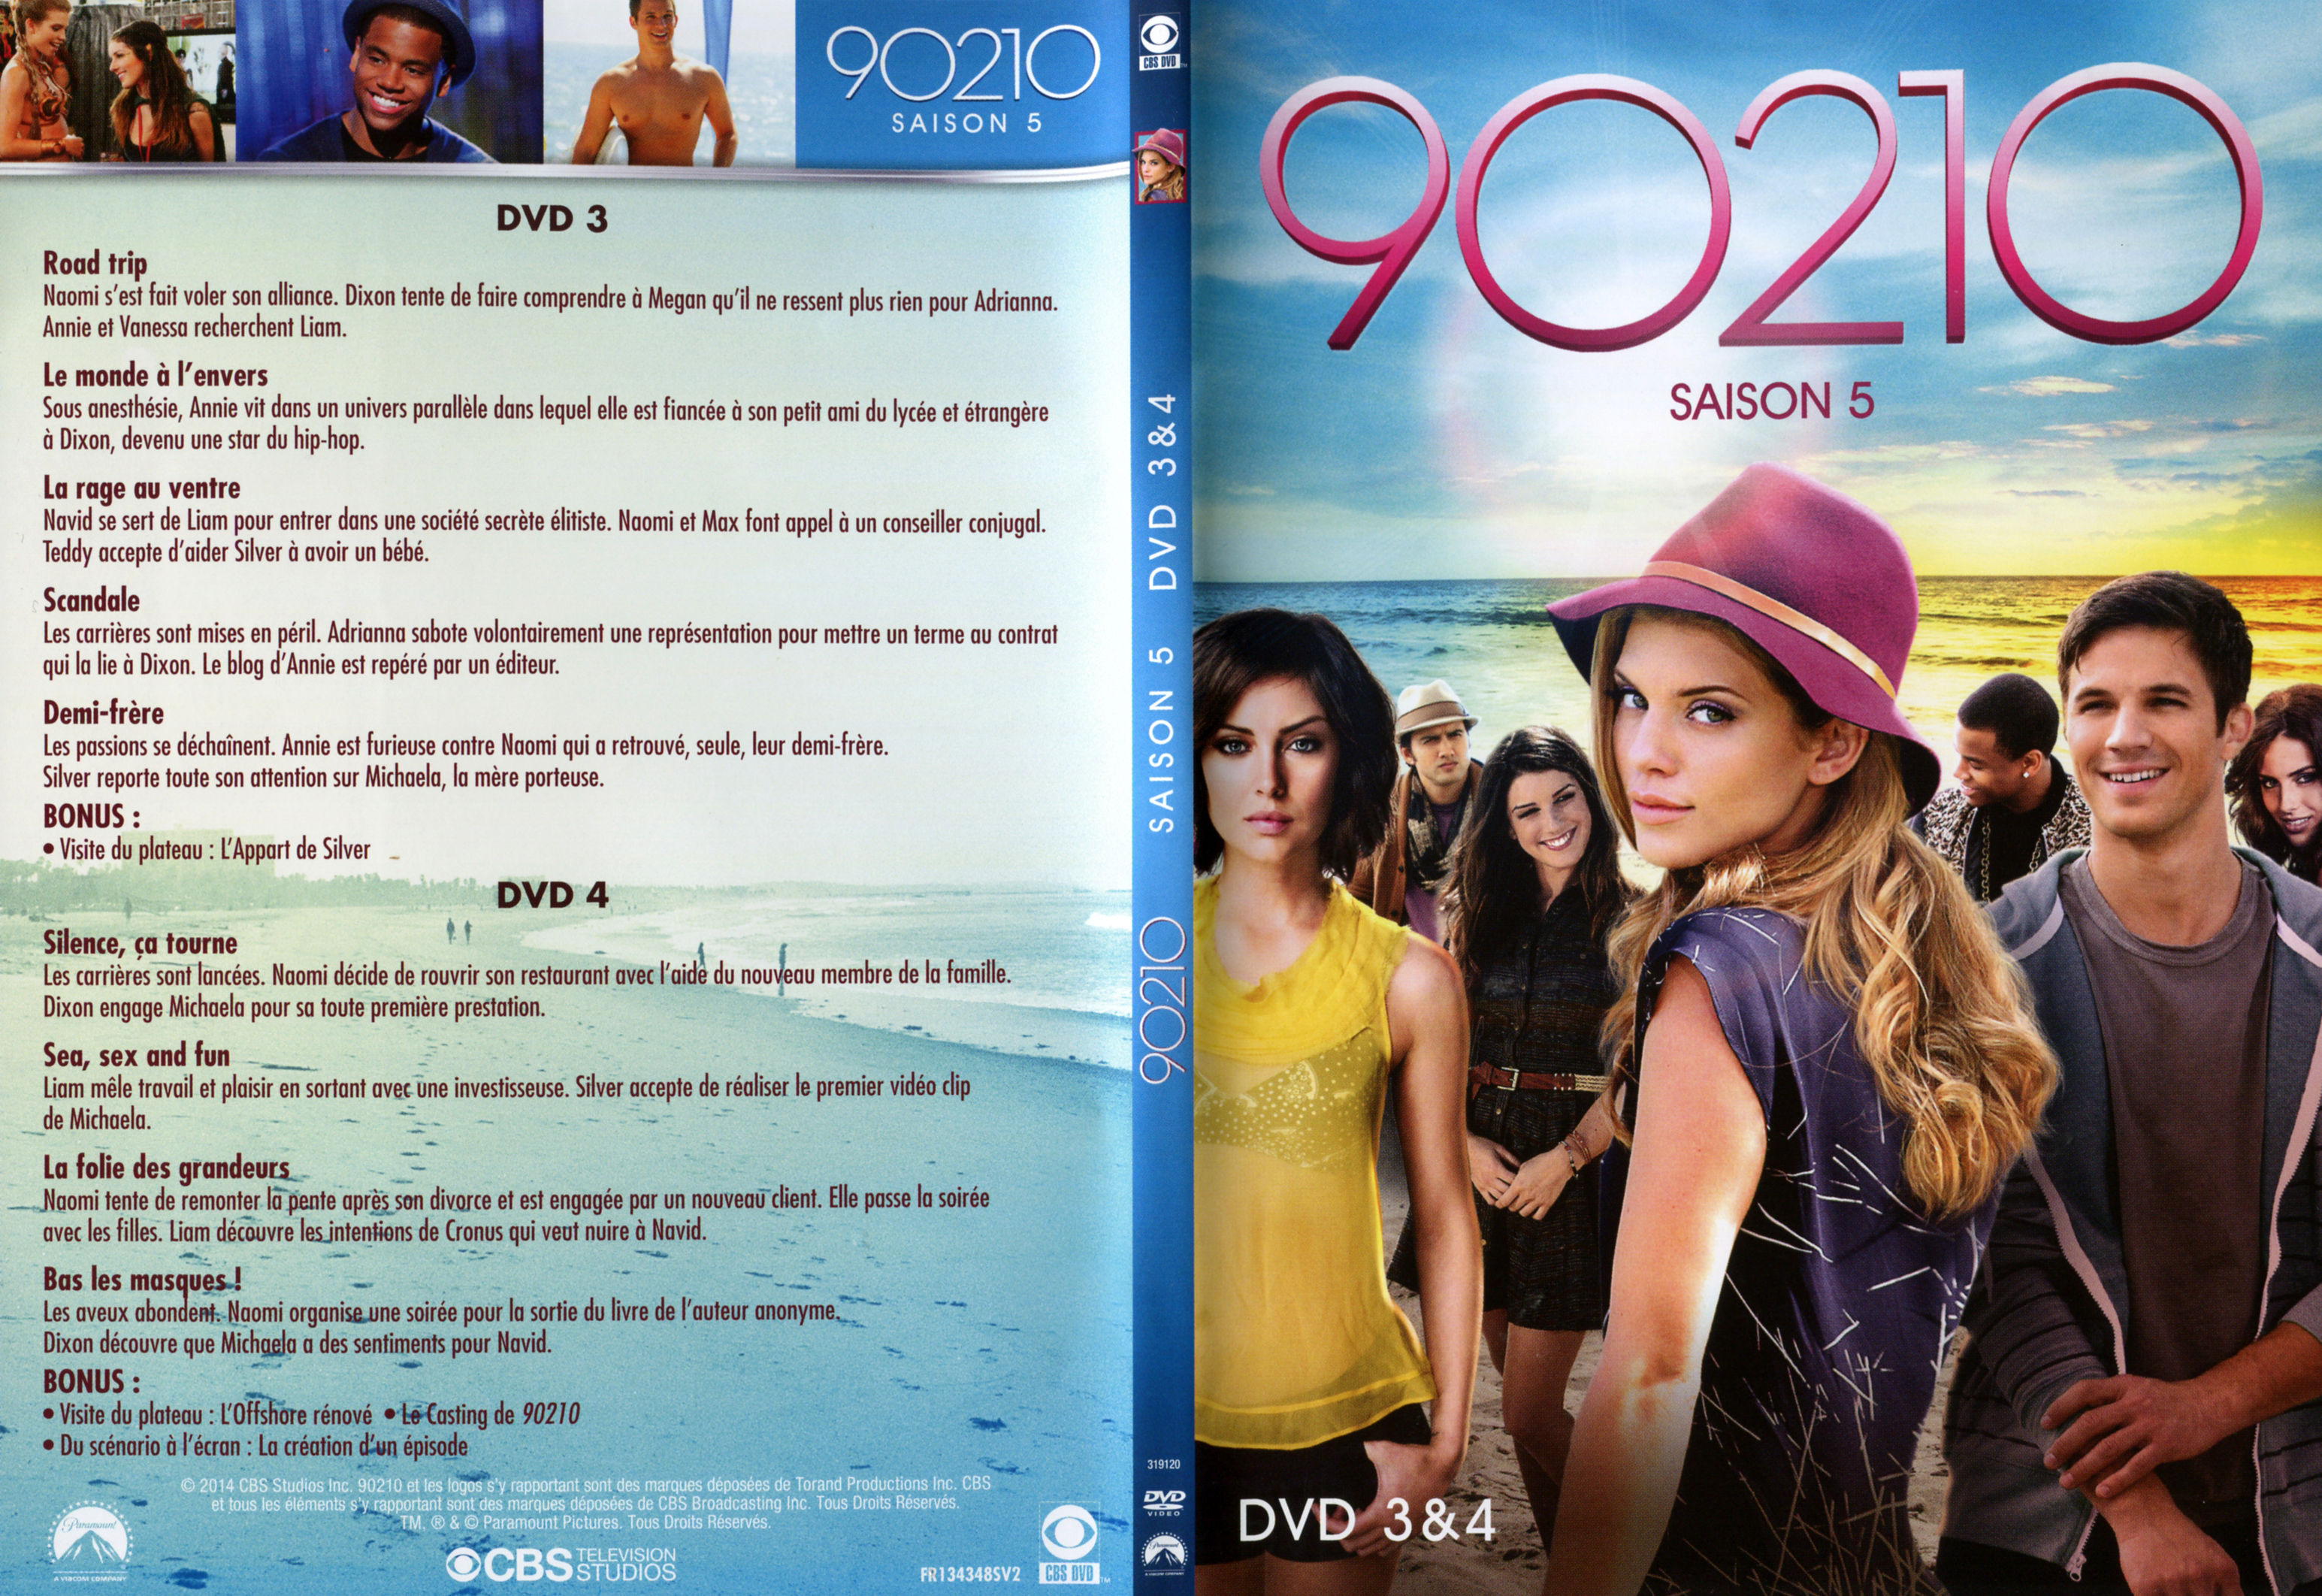 Jaquette DVD 90210 Saison 5 DVD 2